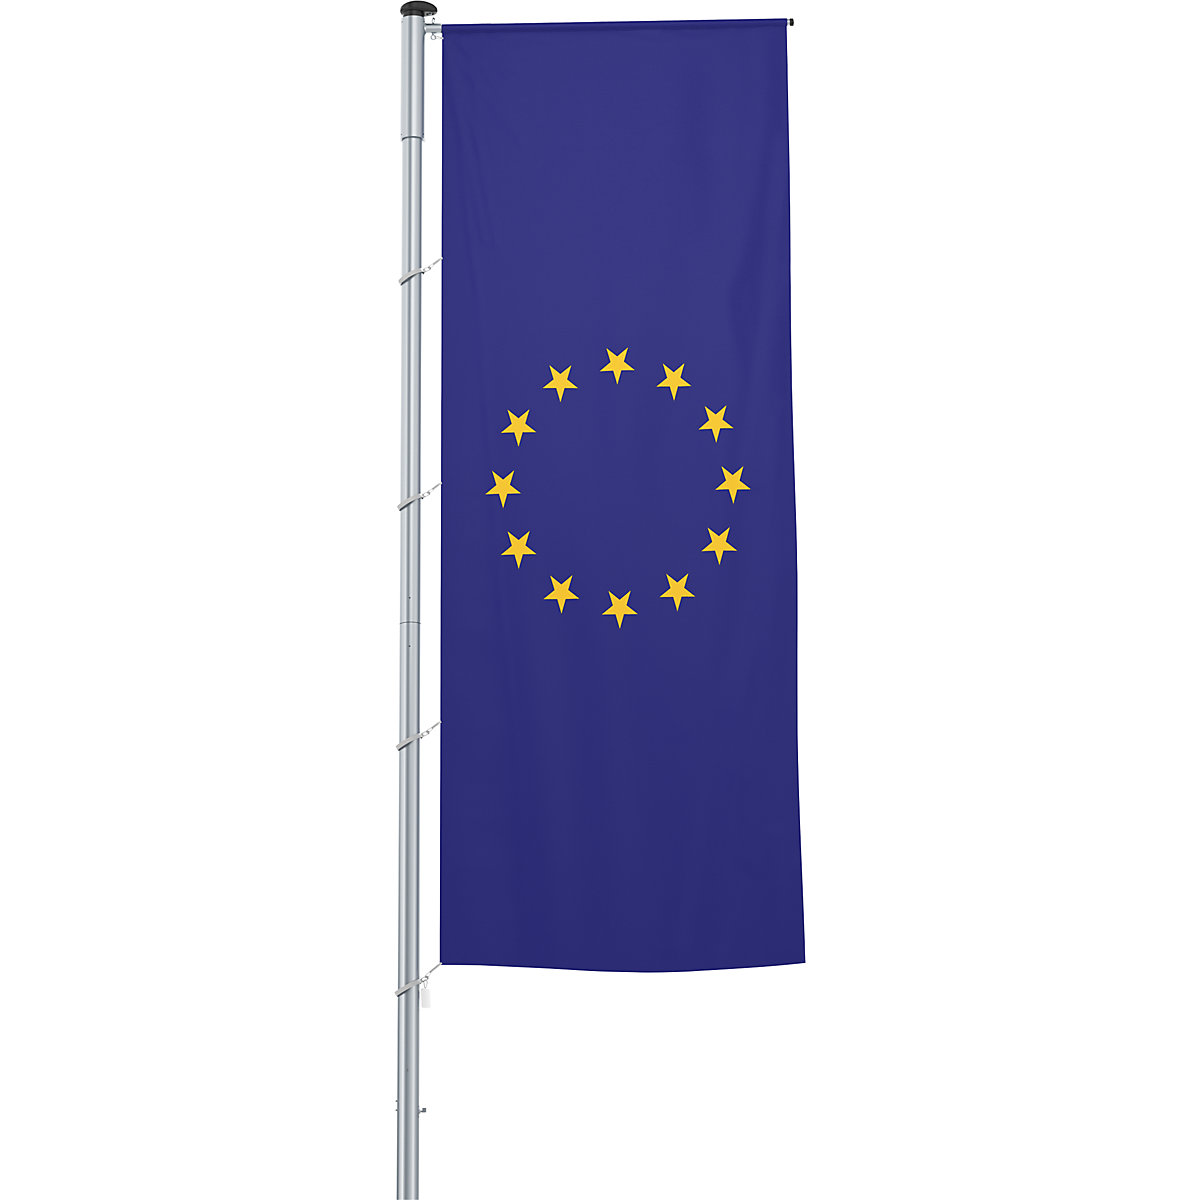 Steag pentru braț/drapel național – Mannus, format 1,2 x 3 m, steagul Europei-29